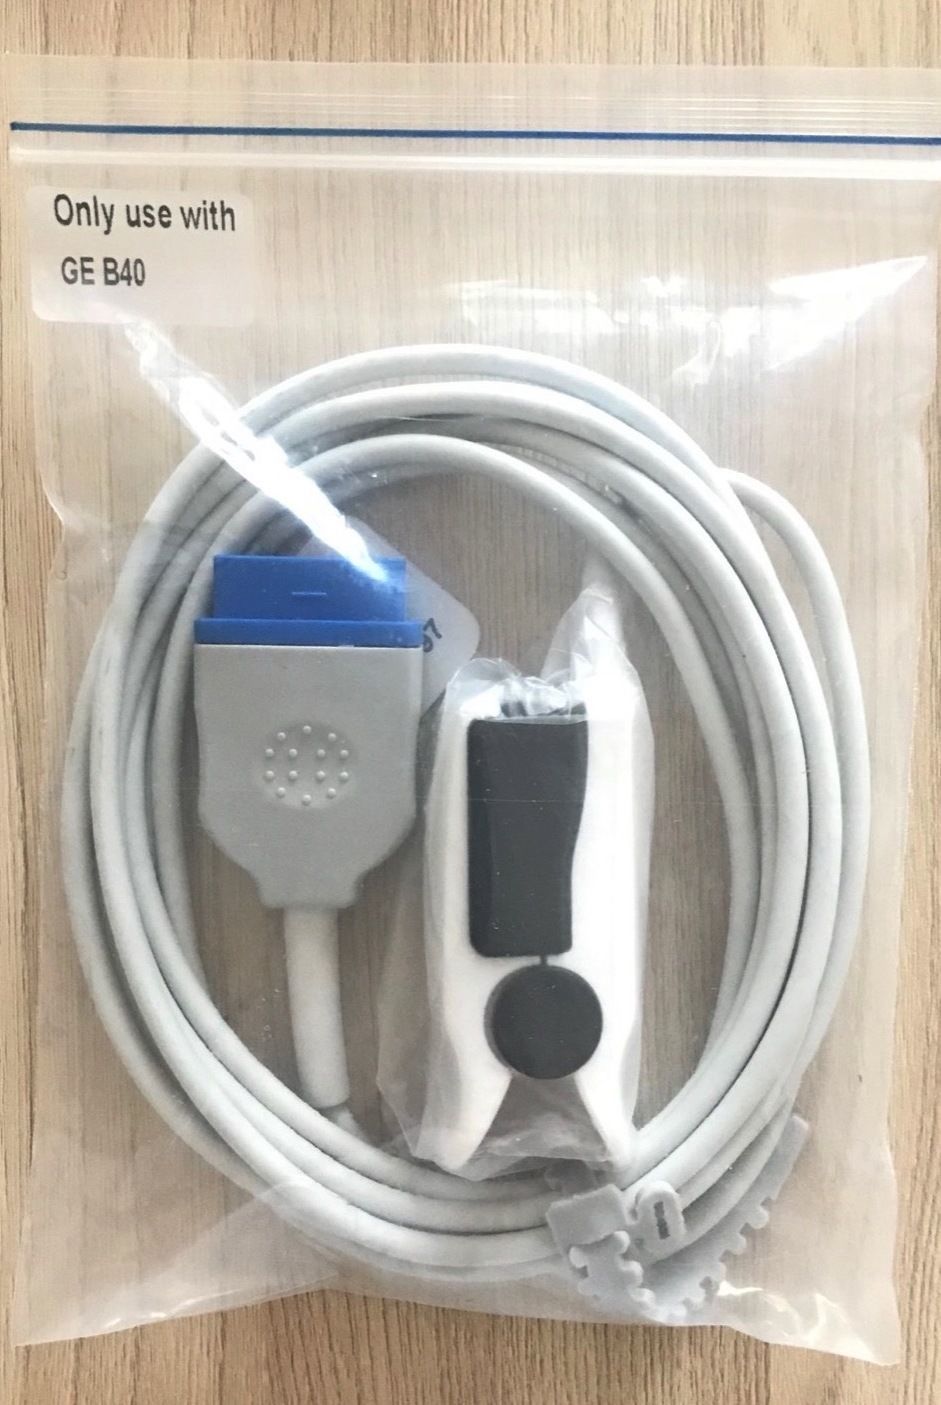 Spo2 Adult cable for Patient Monitor GE B40_สายวัดแซทปริมาณออกซิเจนในเลือดสำหรับเครื่องมอนิเตอร์ผู้ป่วย GE รุ่น B40